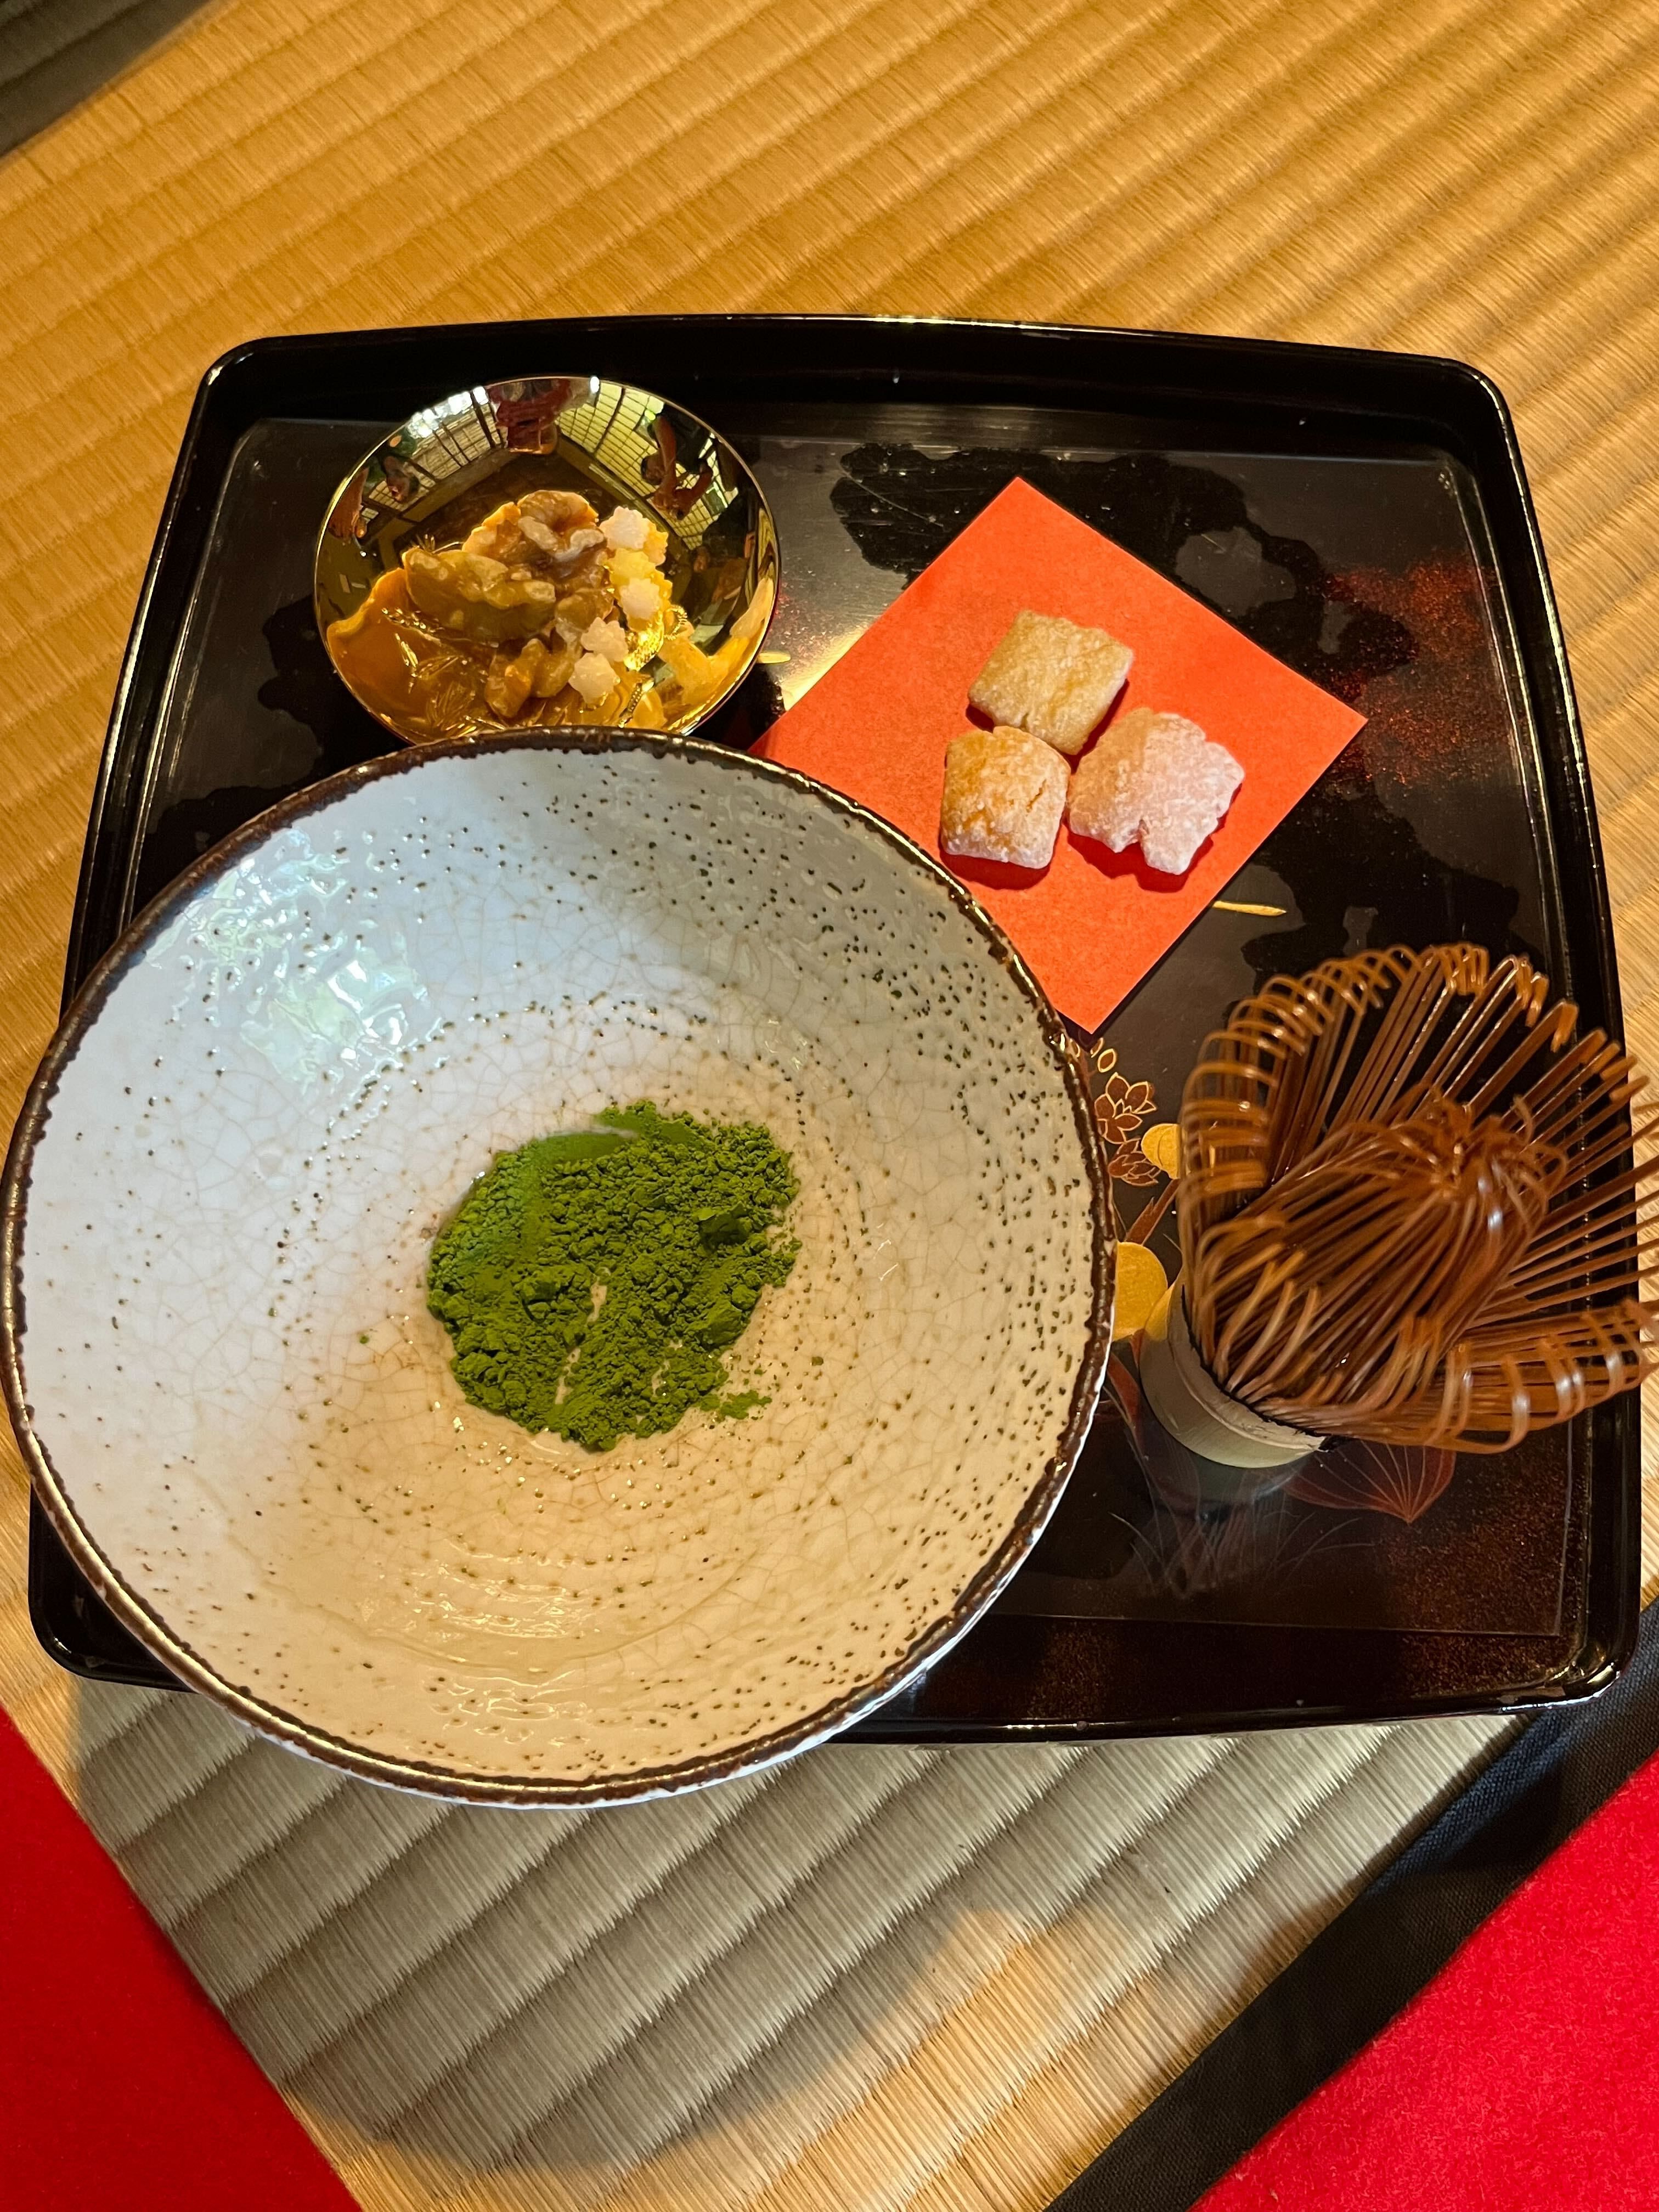 Samurai-style Tea Ceremony and Garden Viewing in Kanazawa